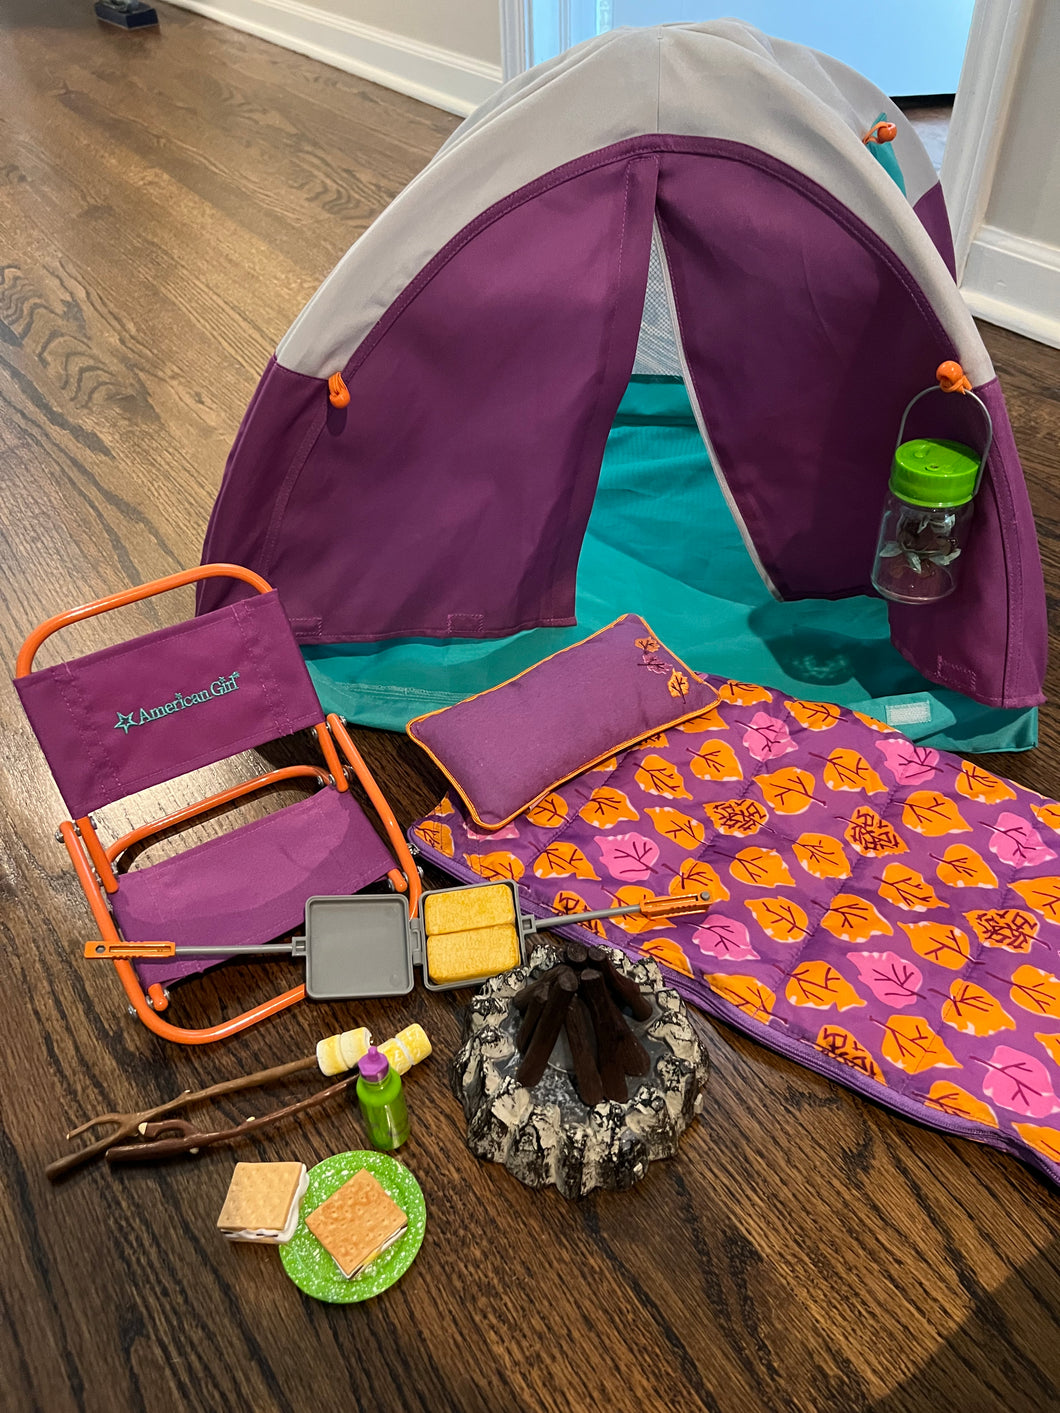 American Girl Camp Tent Sleeping Bag Chair and Set